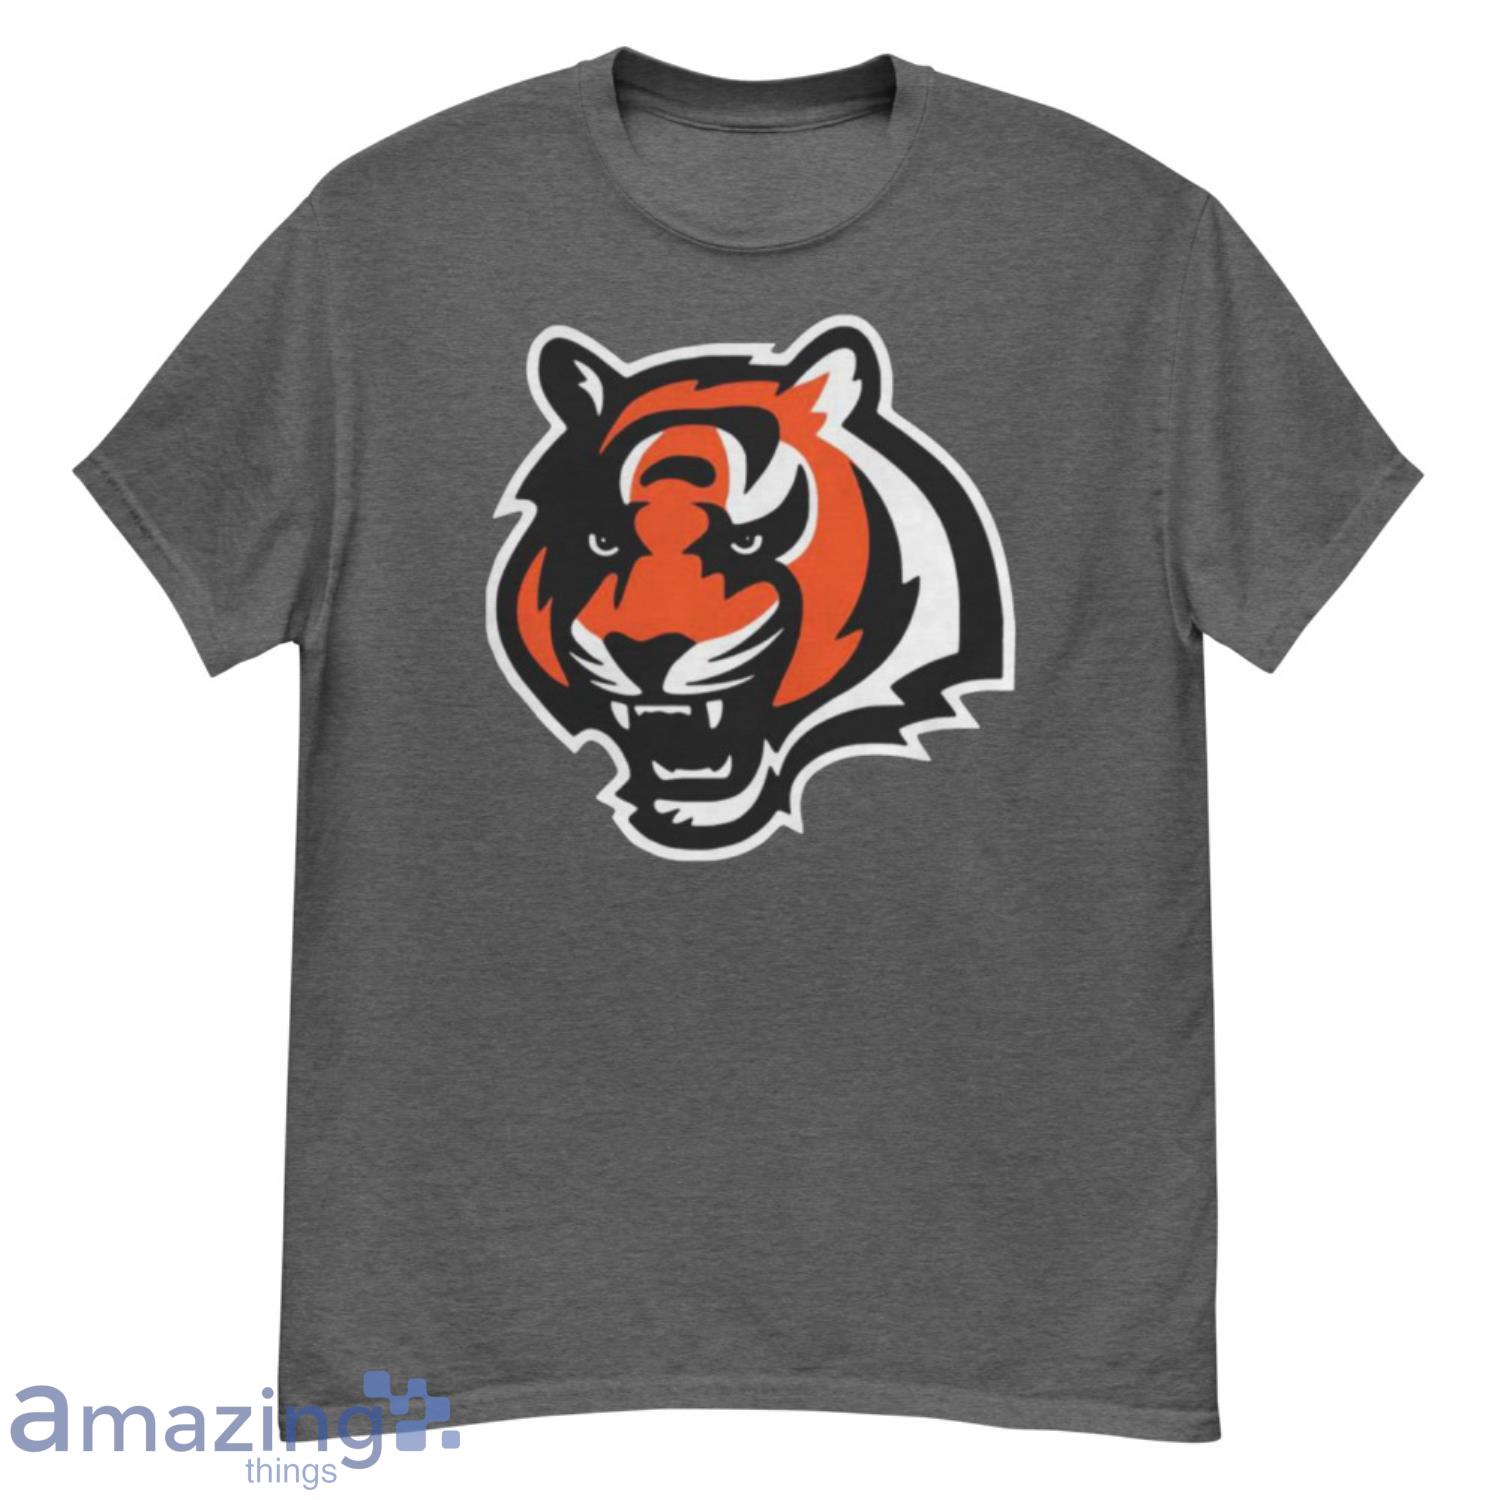 Hot Trending Pretty Hall Of Fame Memorabilia Cincinnati Bengals Logo T-Shirt Product Photo 1